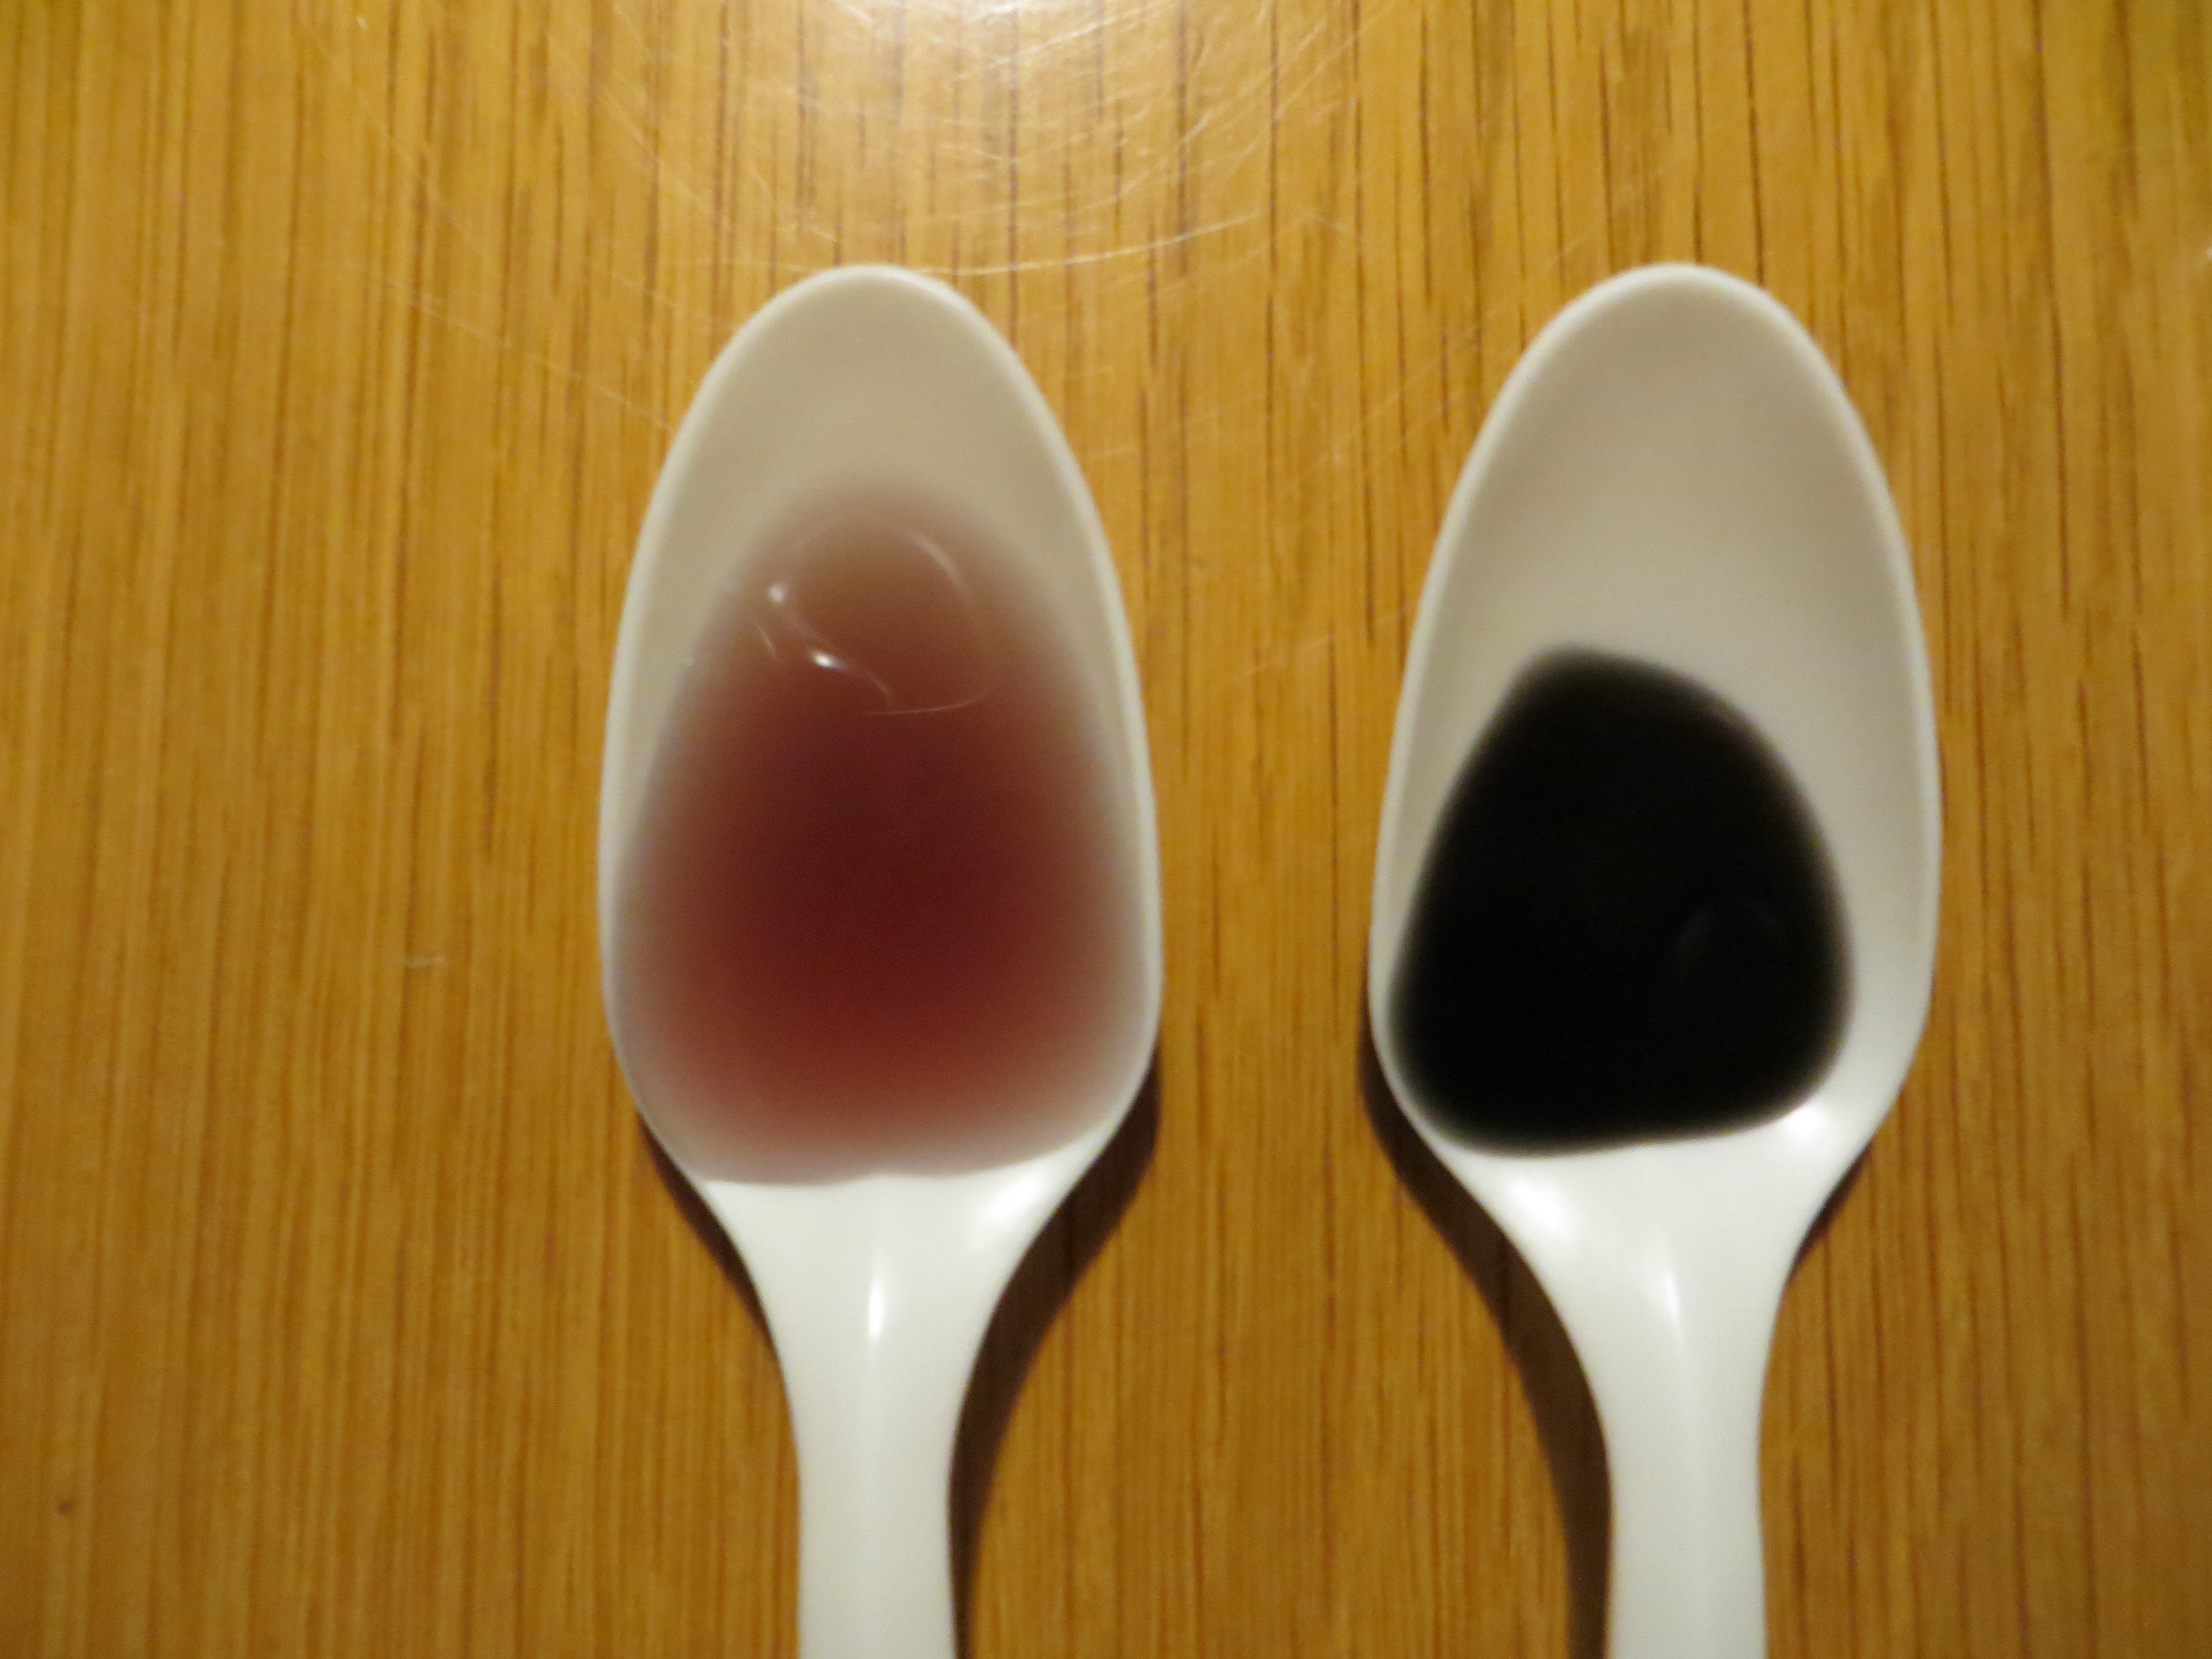 colors-on-white-spoon.jpg